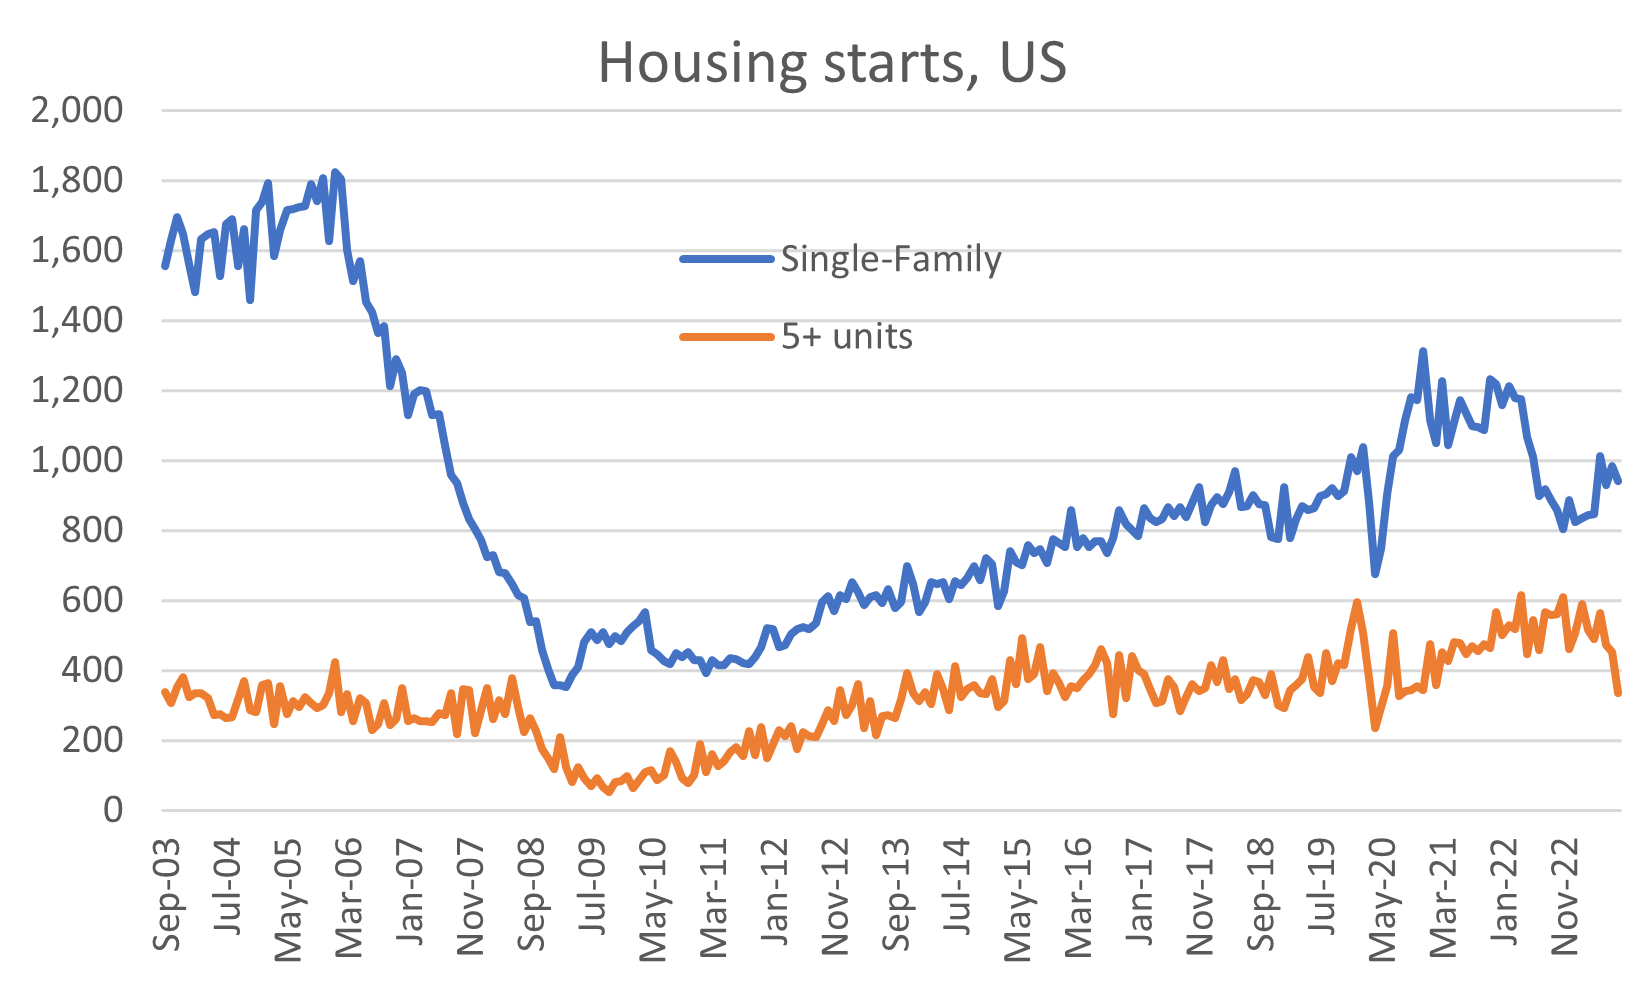 Source: US Census Bureau, Quay Global InvestorsSeasonally adjusted annual rate of dwelling starts